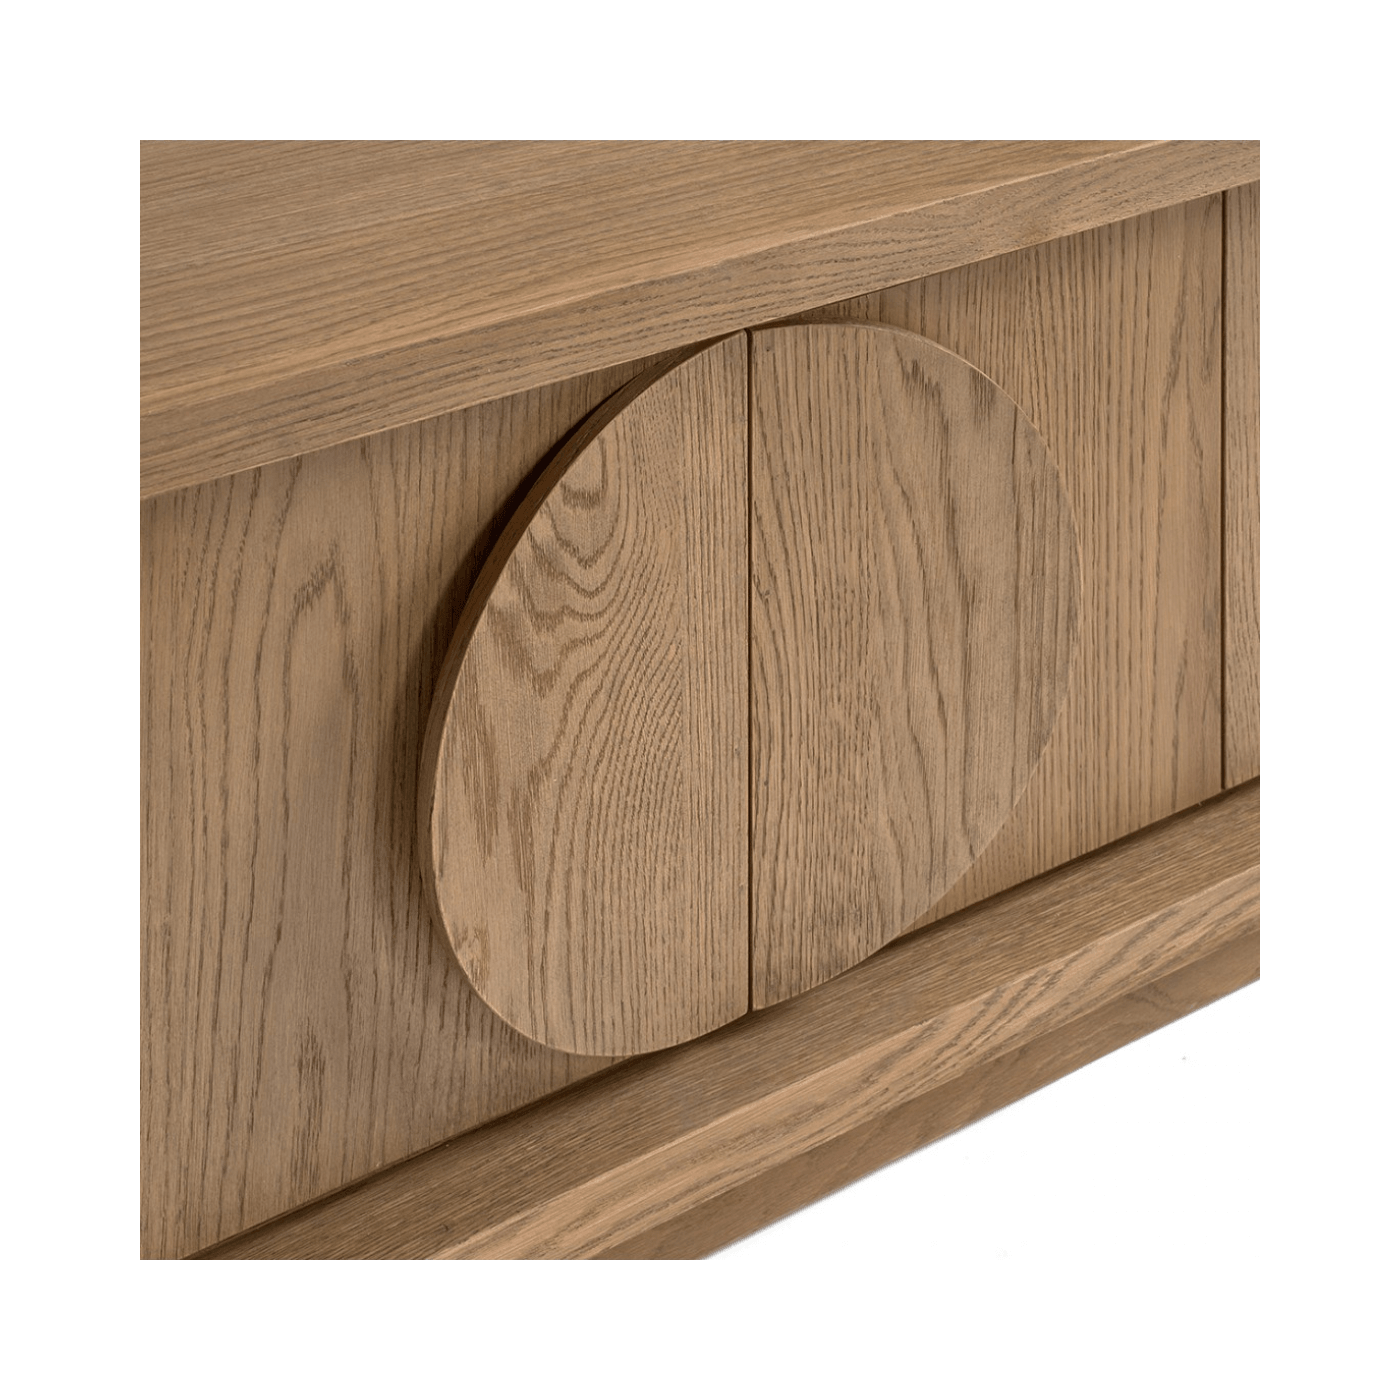 Dublin Natural Oak Wood Sideboard / Lowboard with Six Doors - Maison Rêves UK